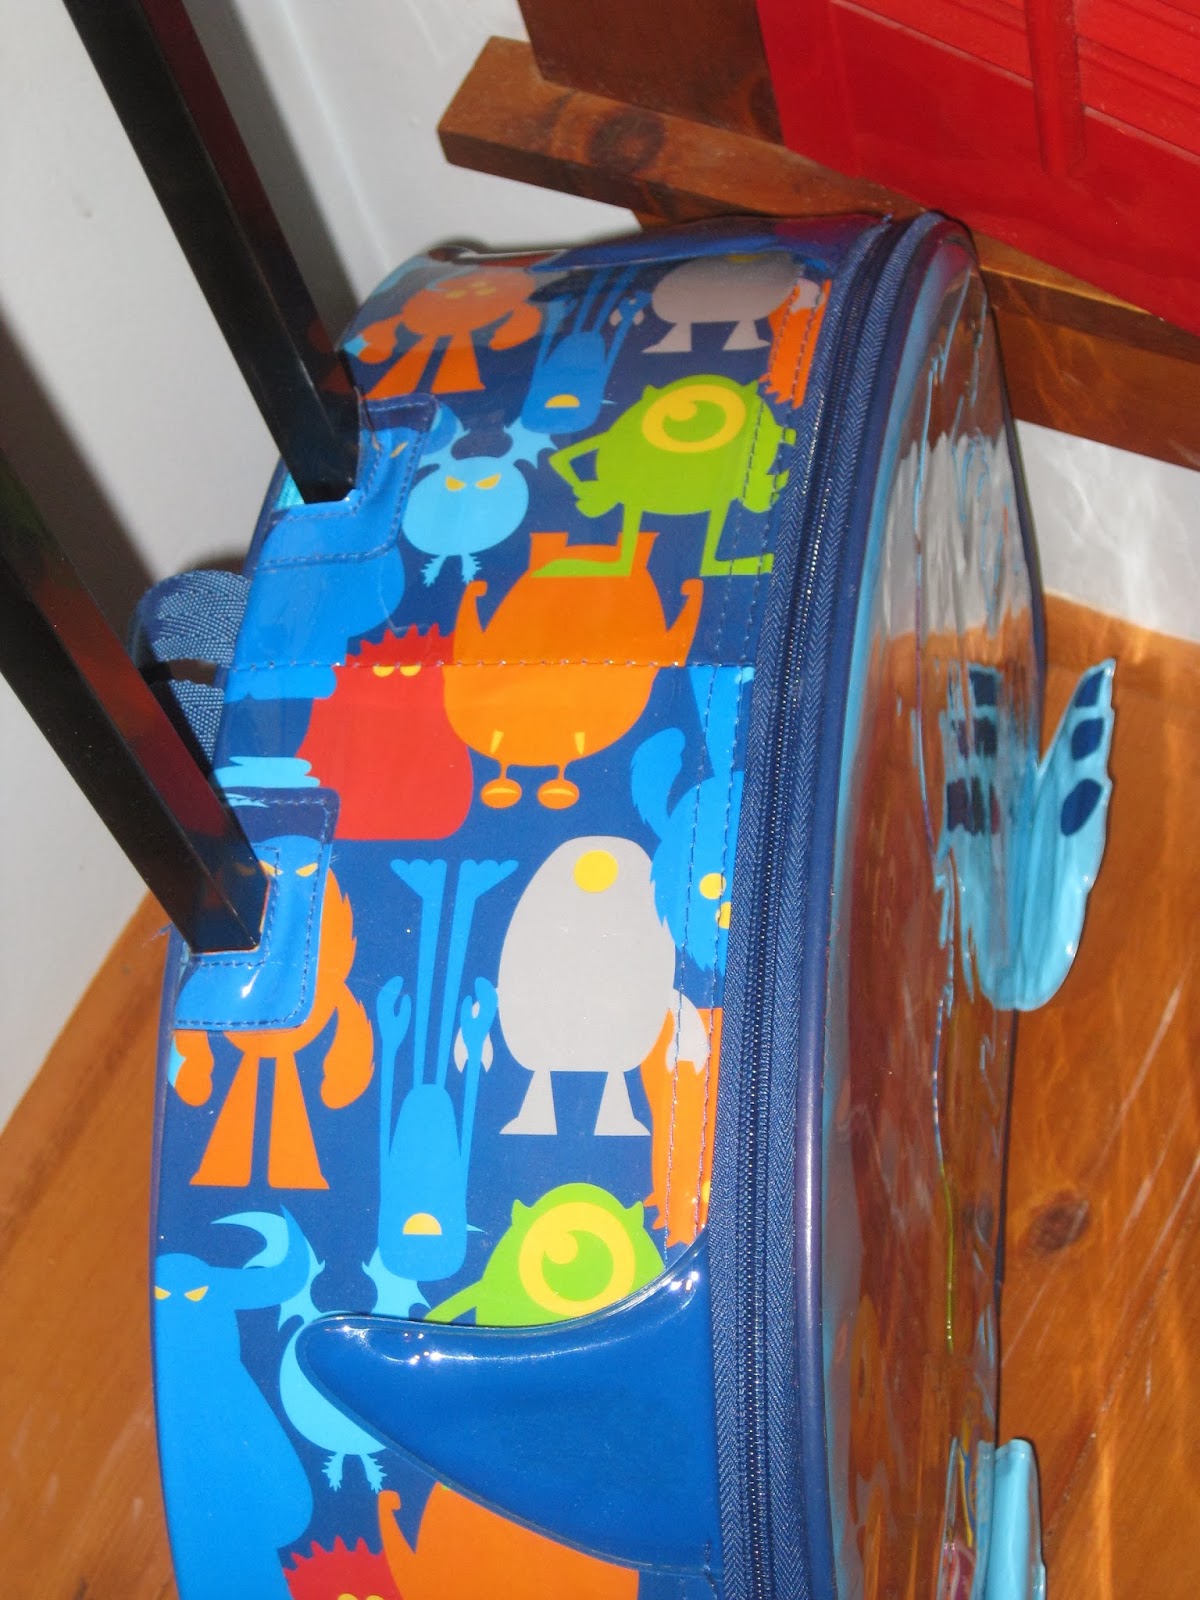 Disney Monsters University Rolling Luggage